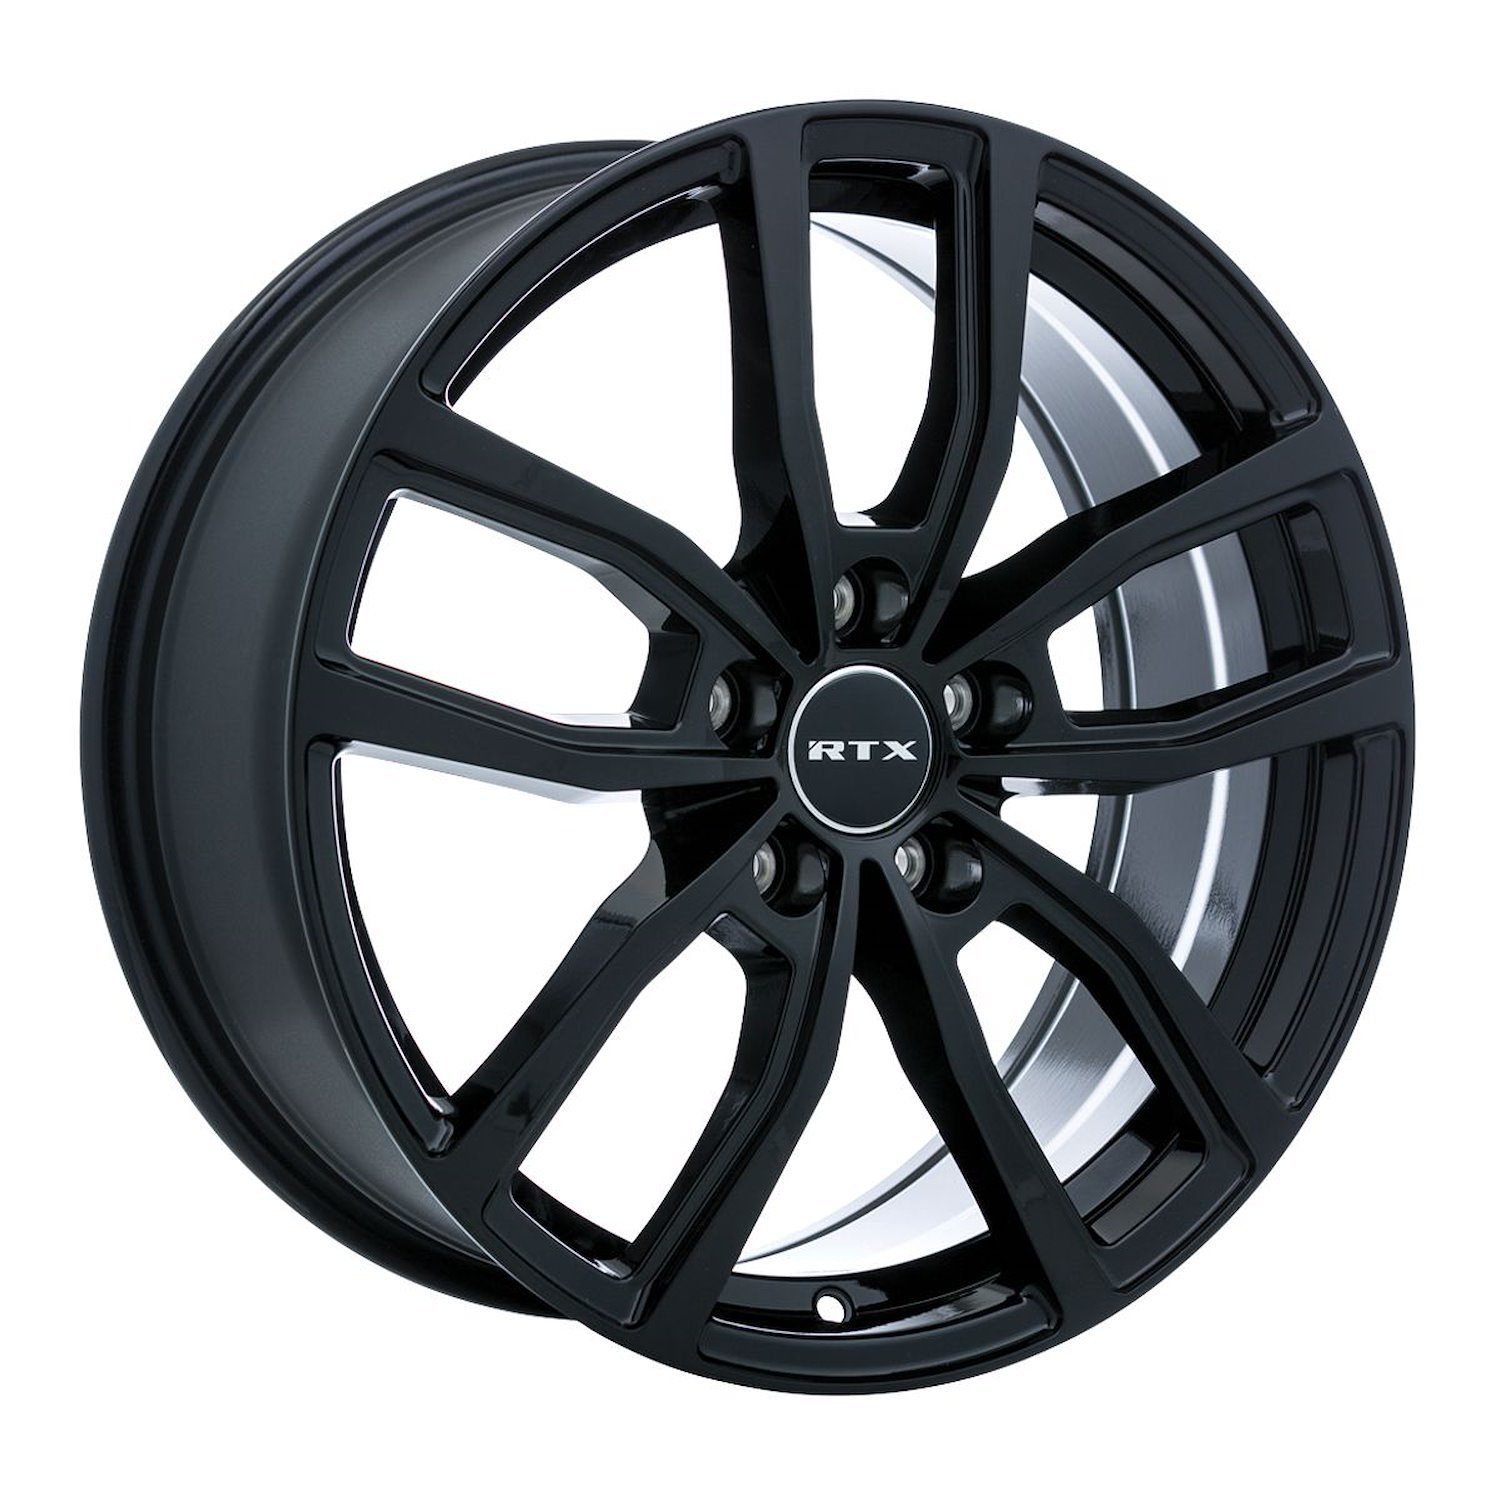 163707 RTX-Series Solstice Wheel [Size: 17" x 7"] Gloss Black Finish